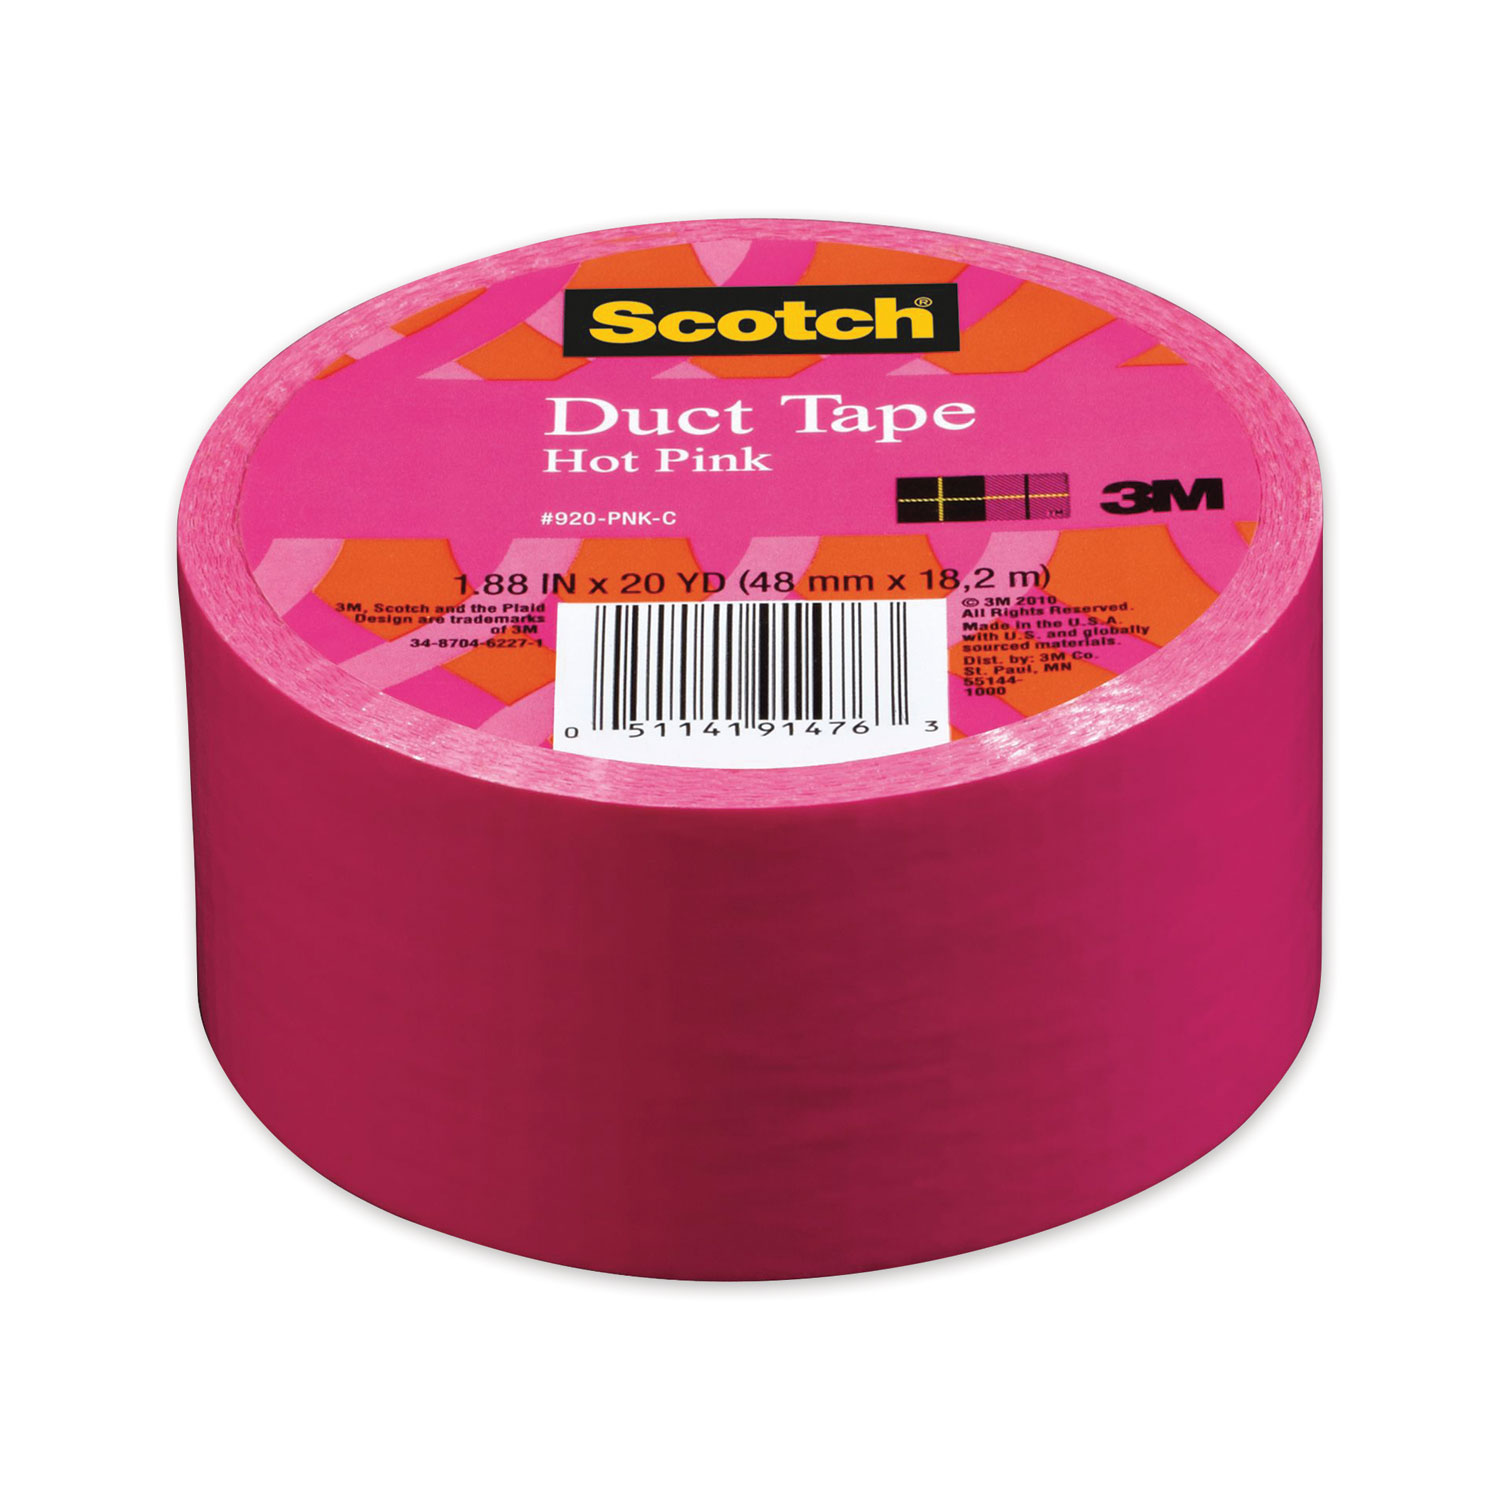  Scotch 920-PNK-C Duct Tape, 1.88 x 20 yds, Hot Pink (MMM70005058170) 